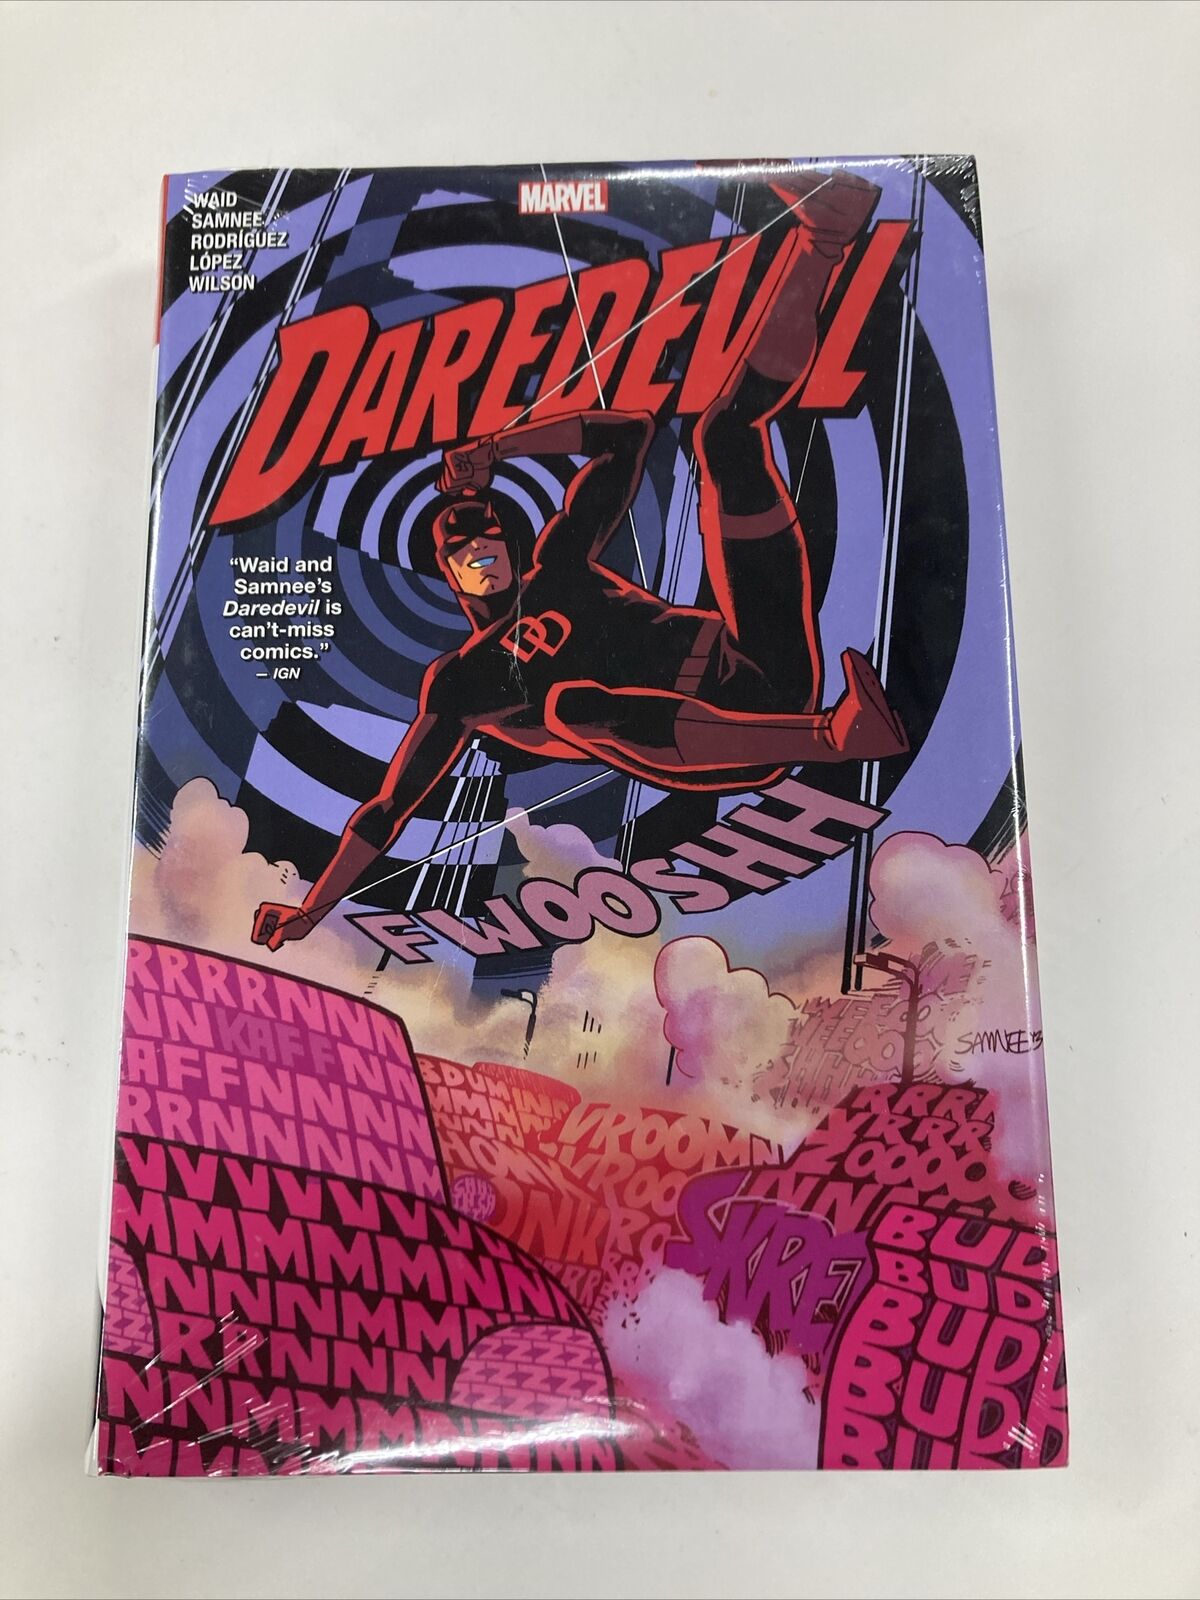 DAMAGED Daredevil by Waid & Samnee Omnibus Vol 2 REGULAR COVER Marvel HC